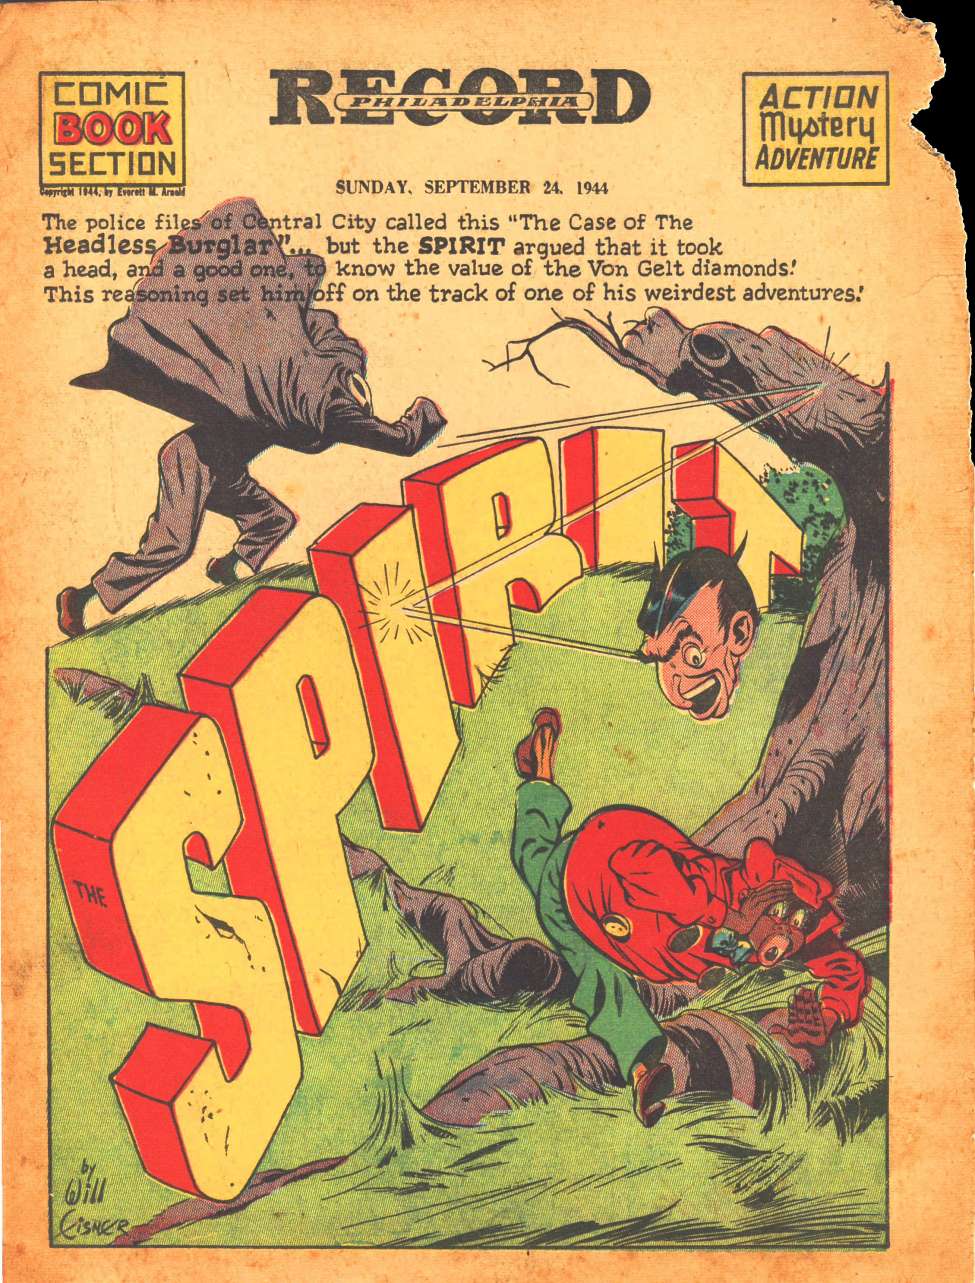 Comic Book Cover For The Spirit (1944-09-24) - Philadelphia Record